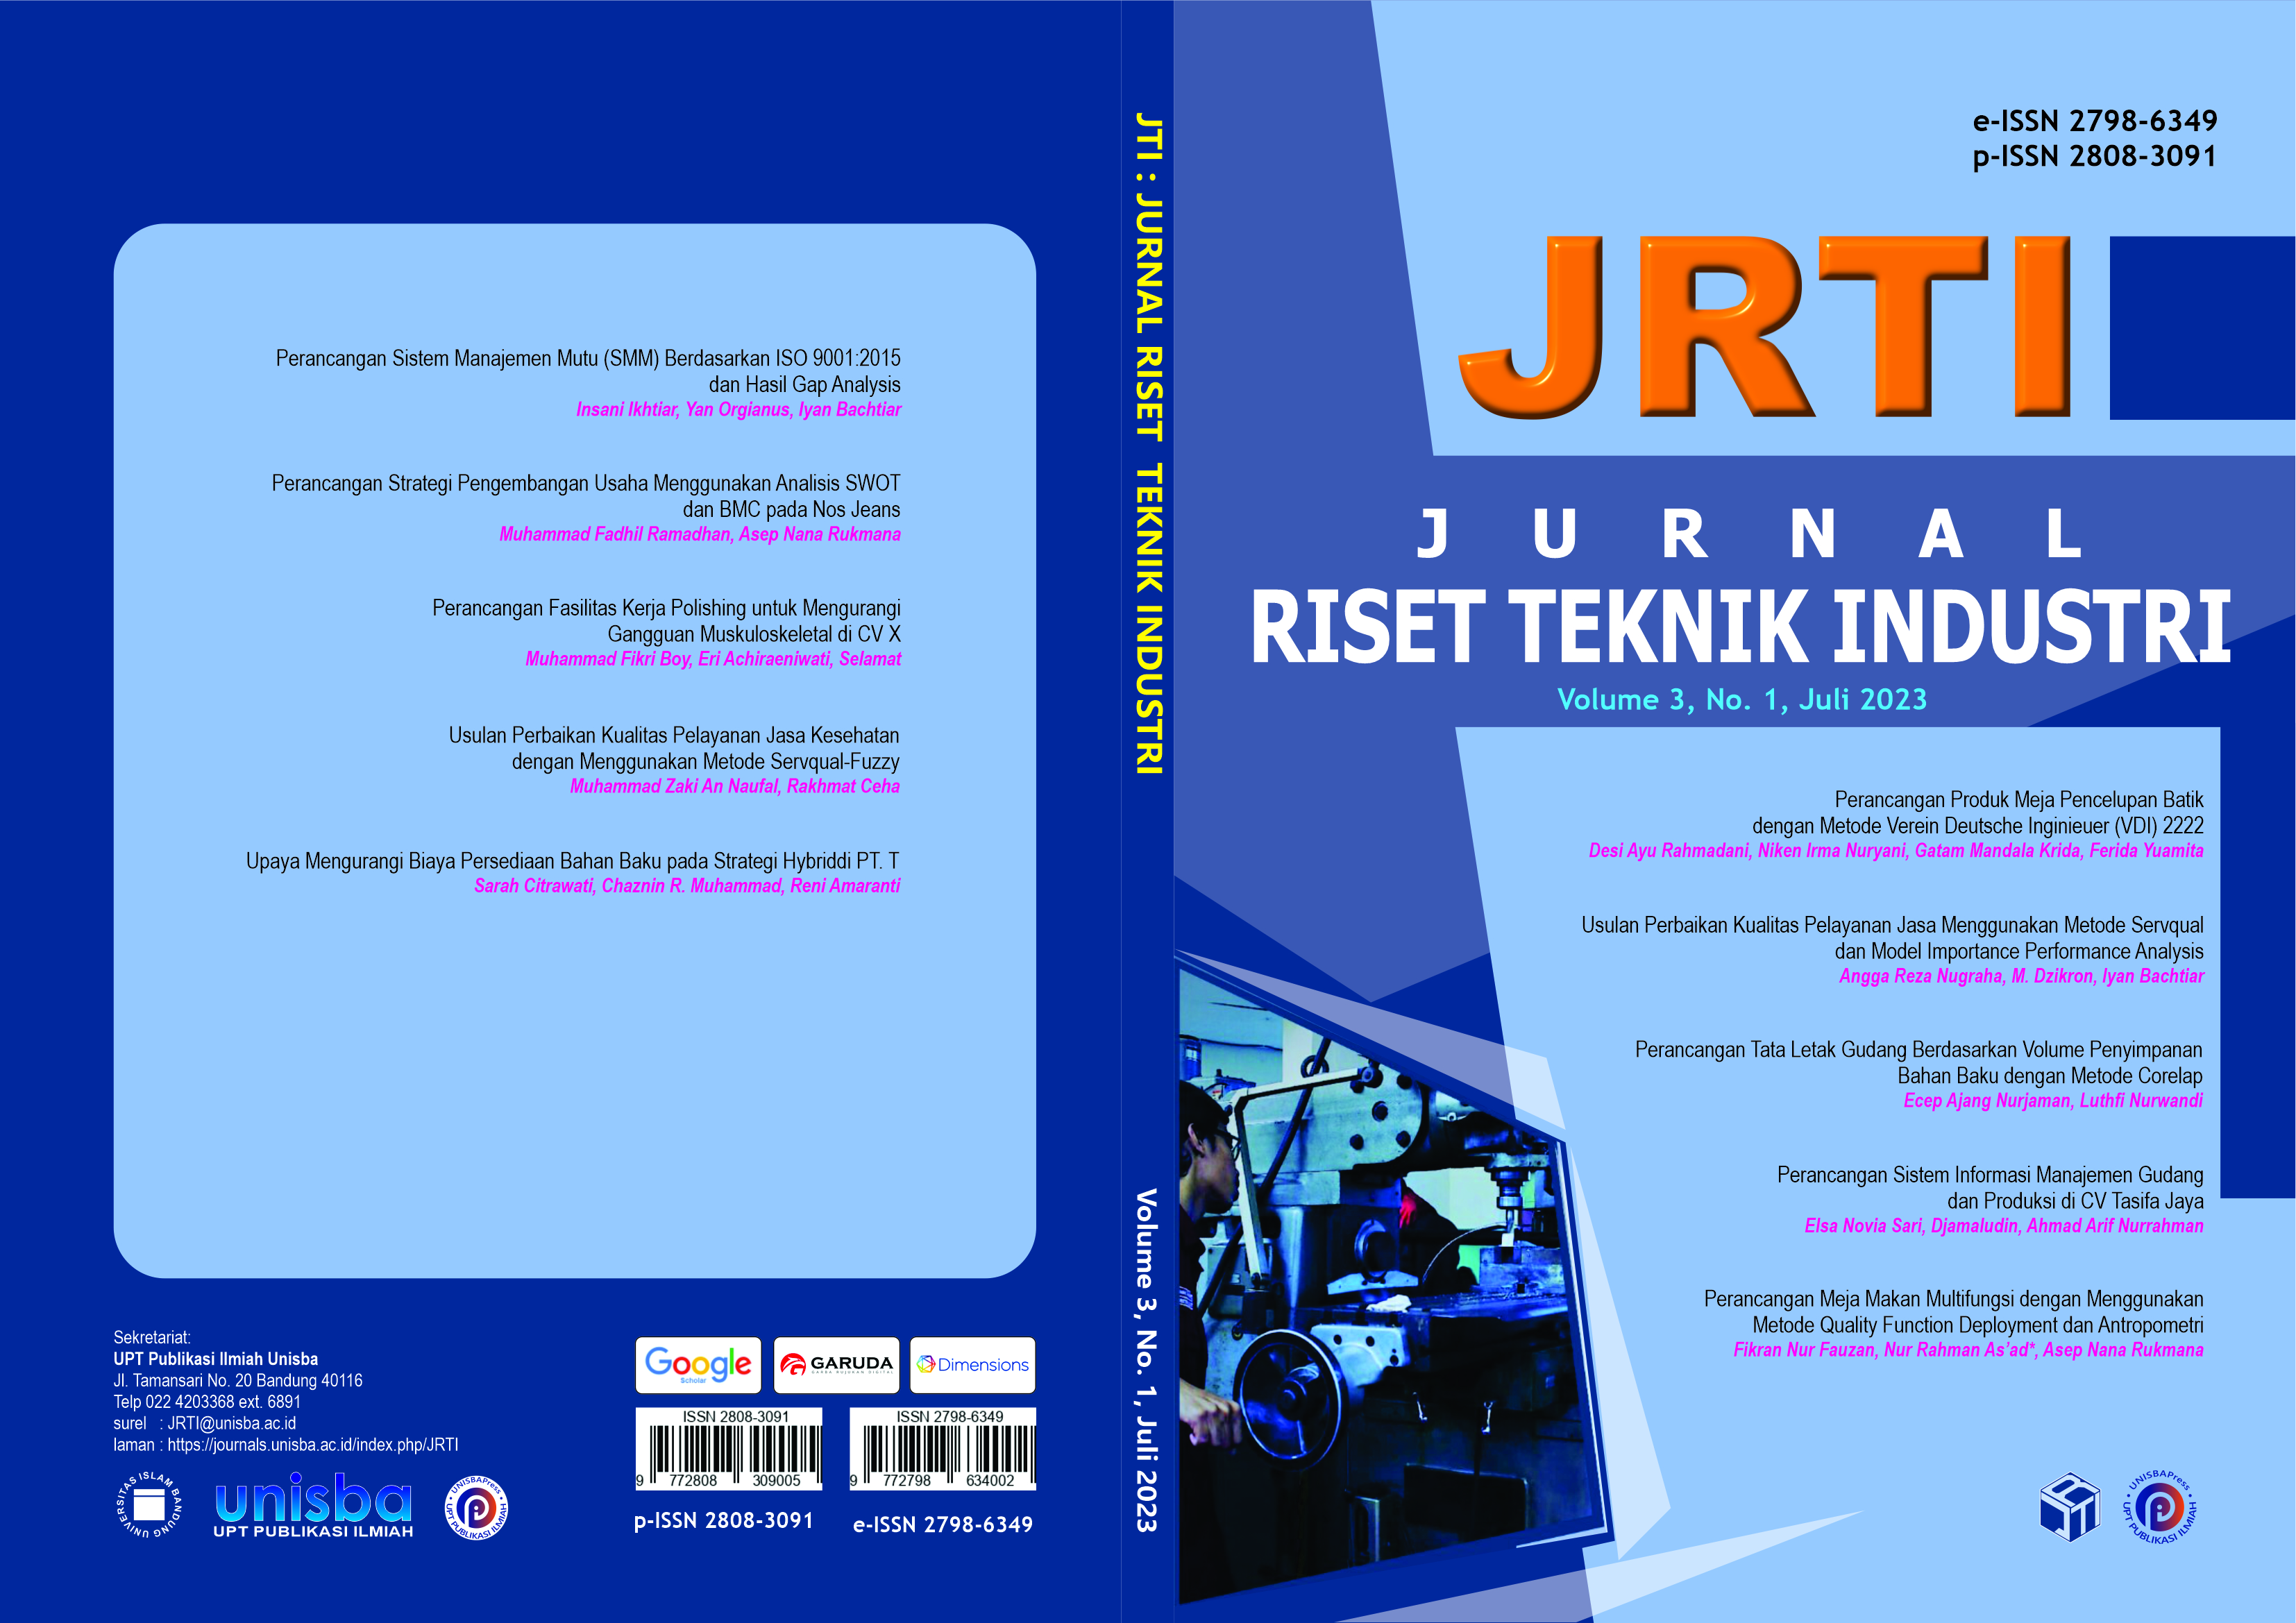 					View Volume 3, No. 1, Juli 2023, Jurnal Riset Teknik Industri (JRTI)
				